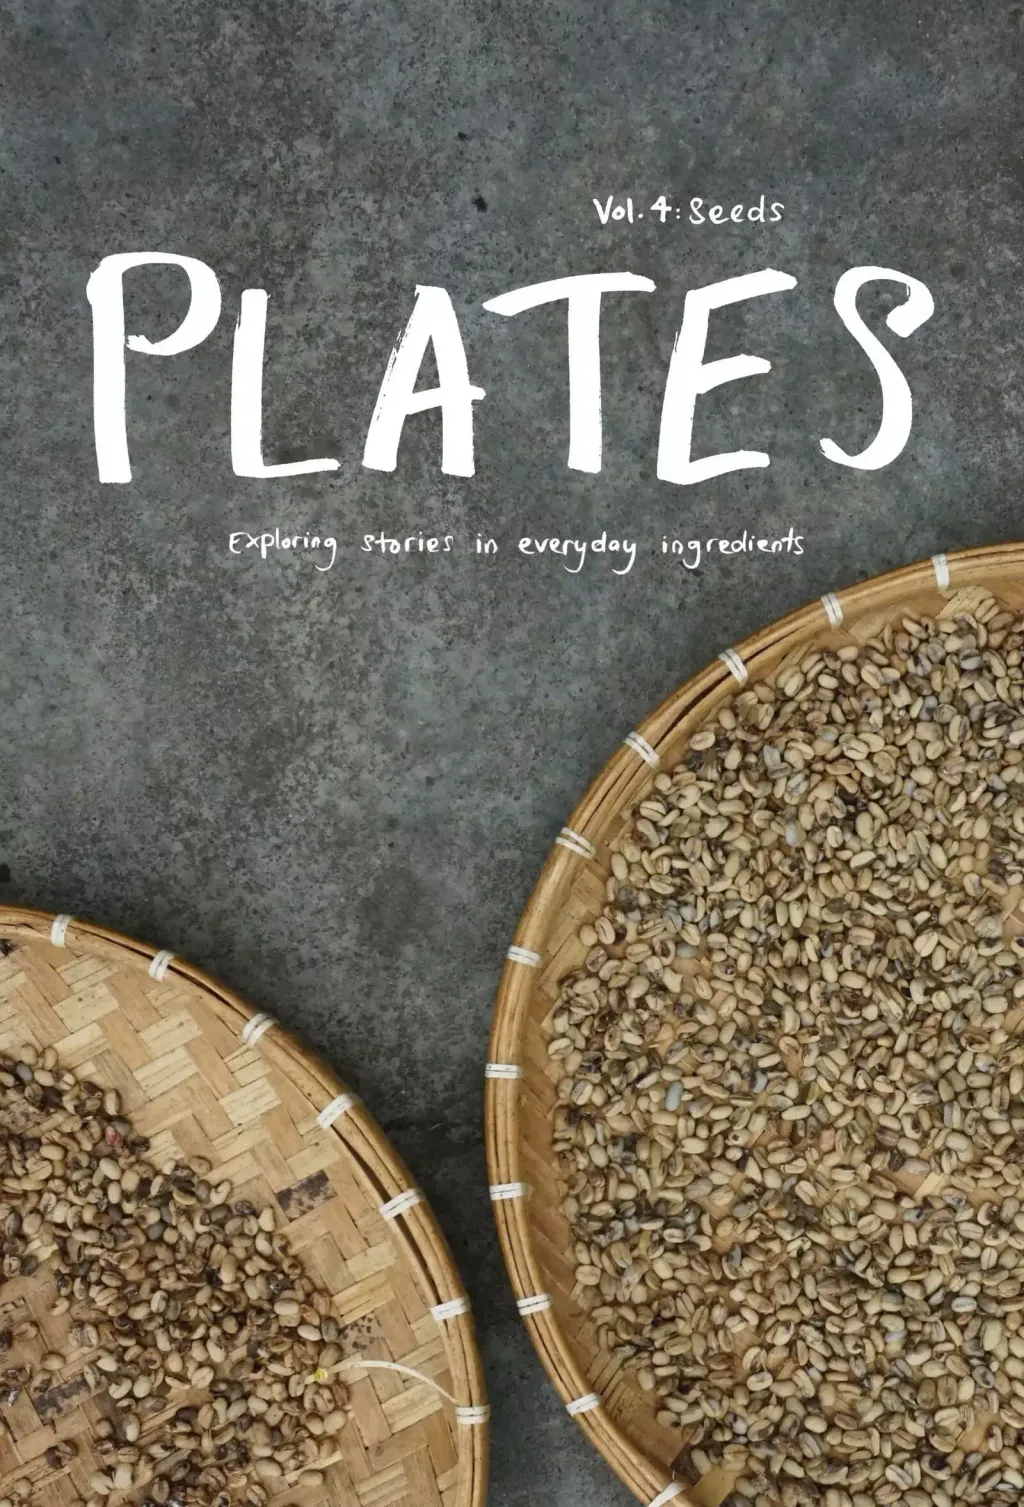 plates-magazine-volume-4-seeds-buy-online